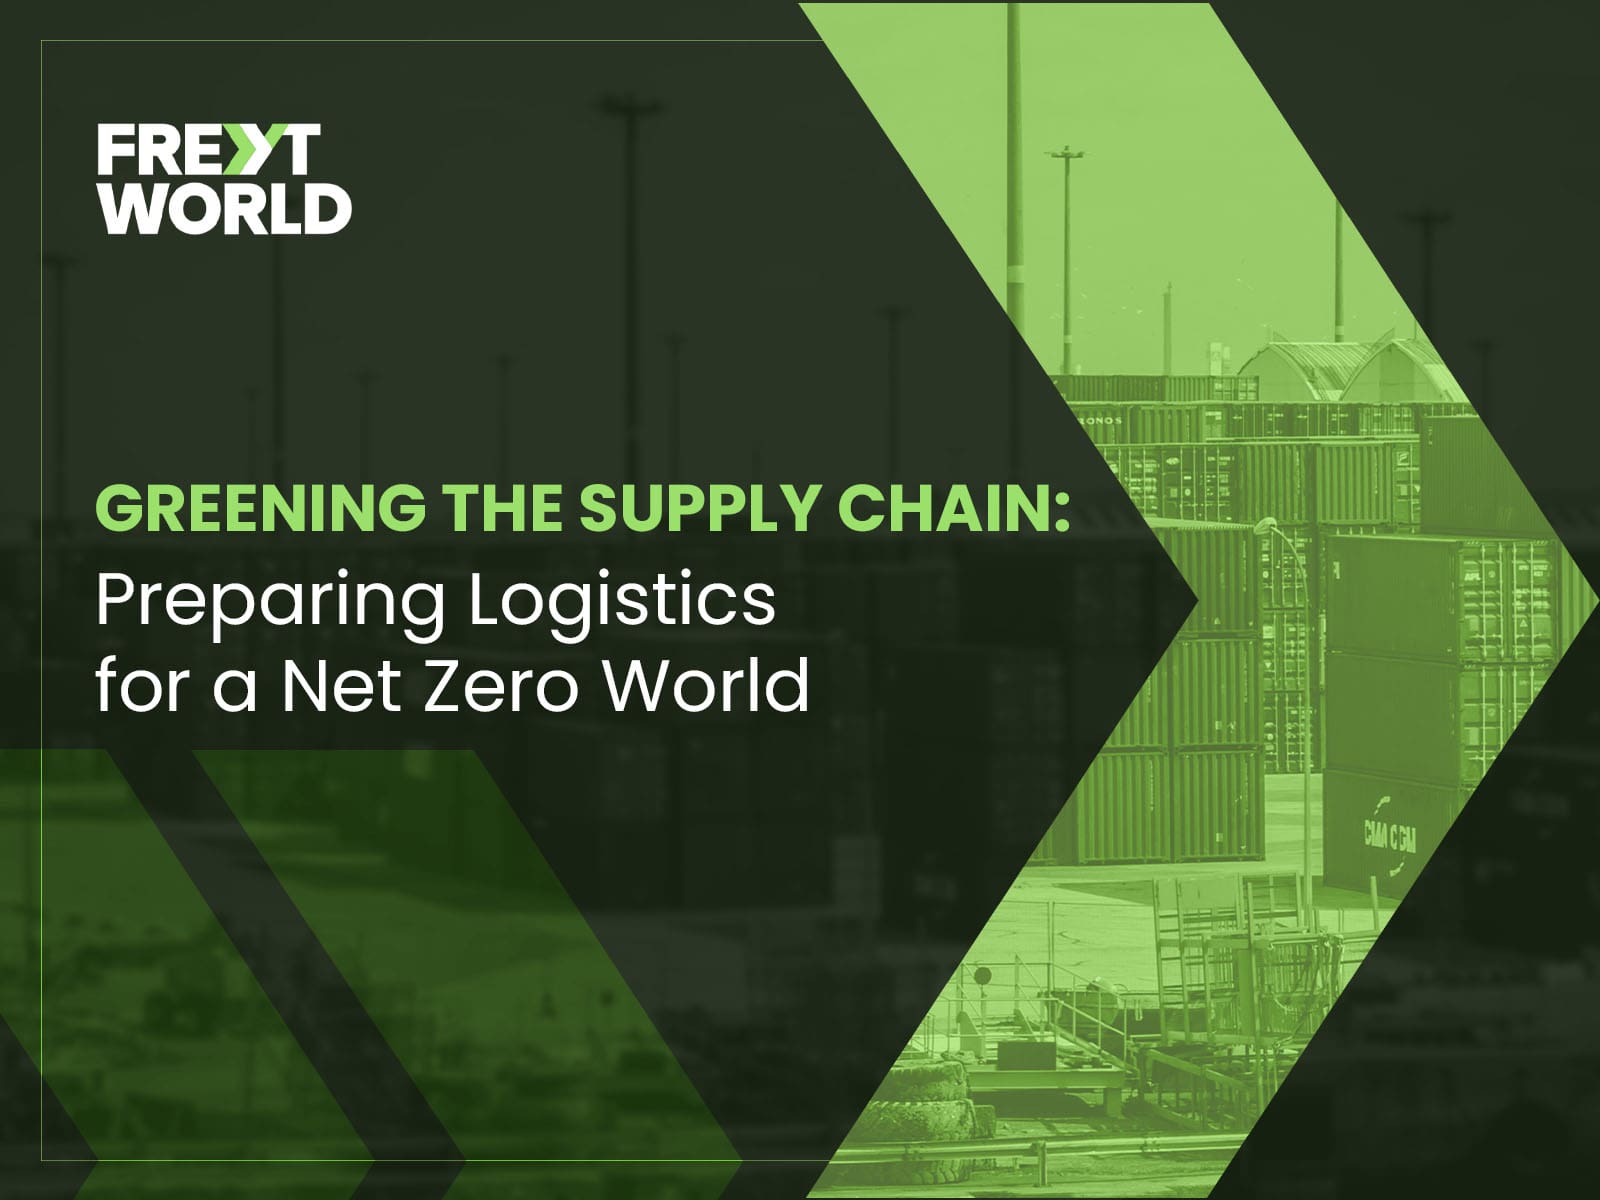 Greening the Supply Chain: Preparing Logistics for a Net Zero World